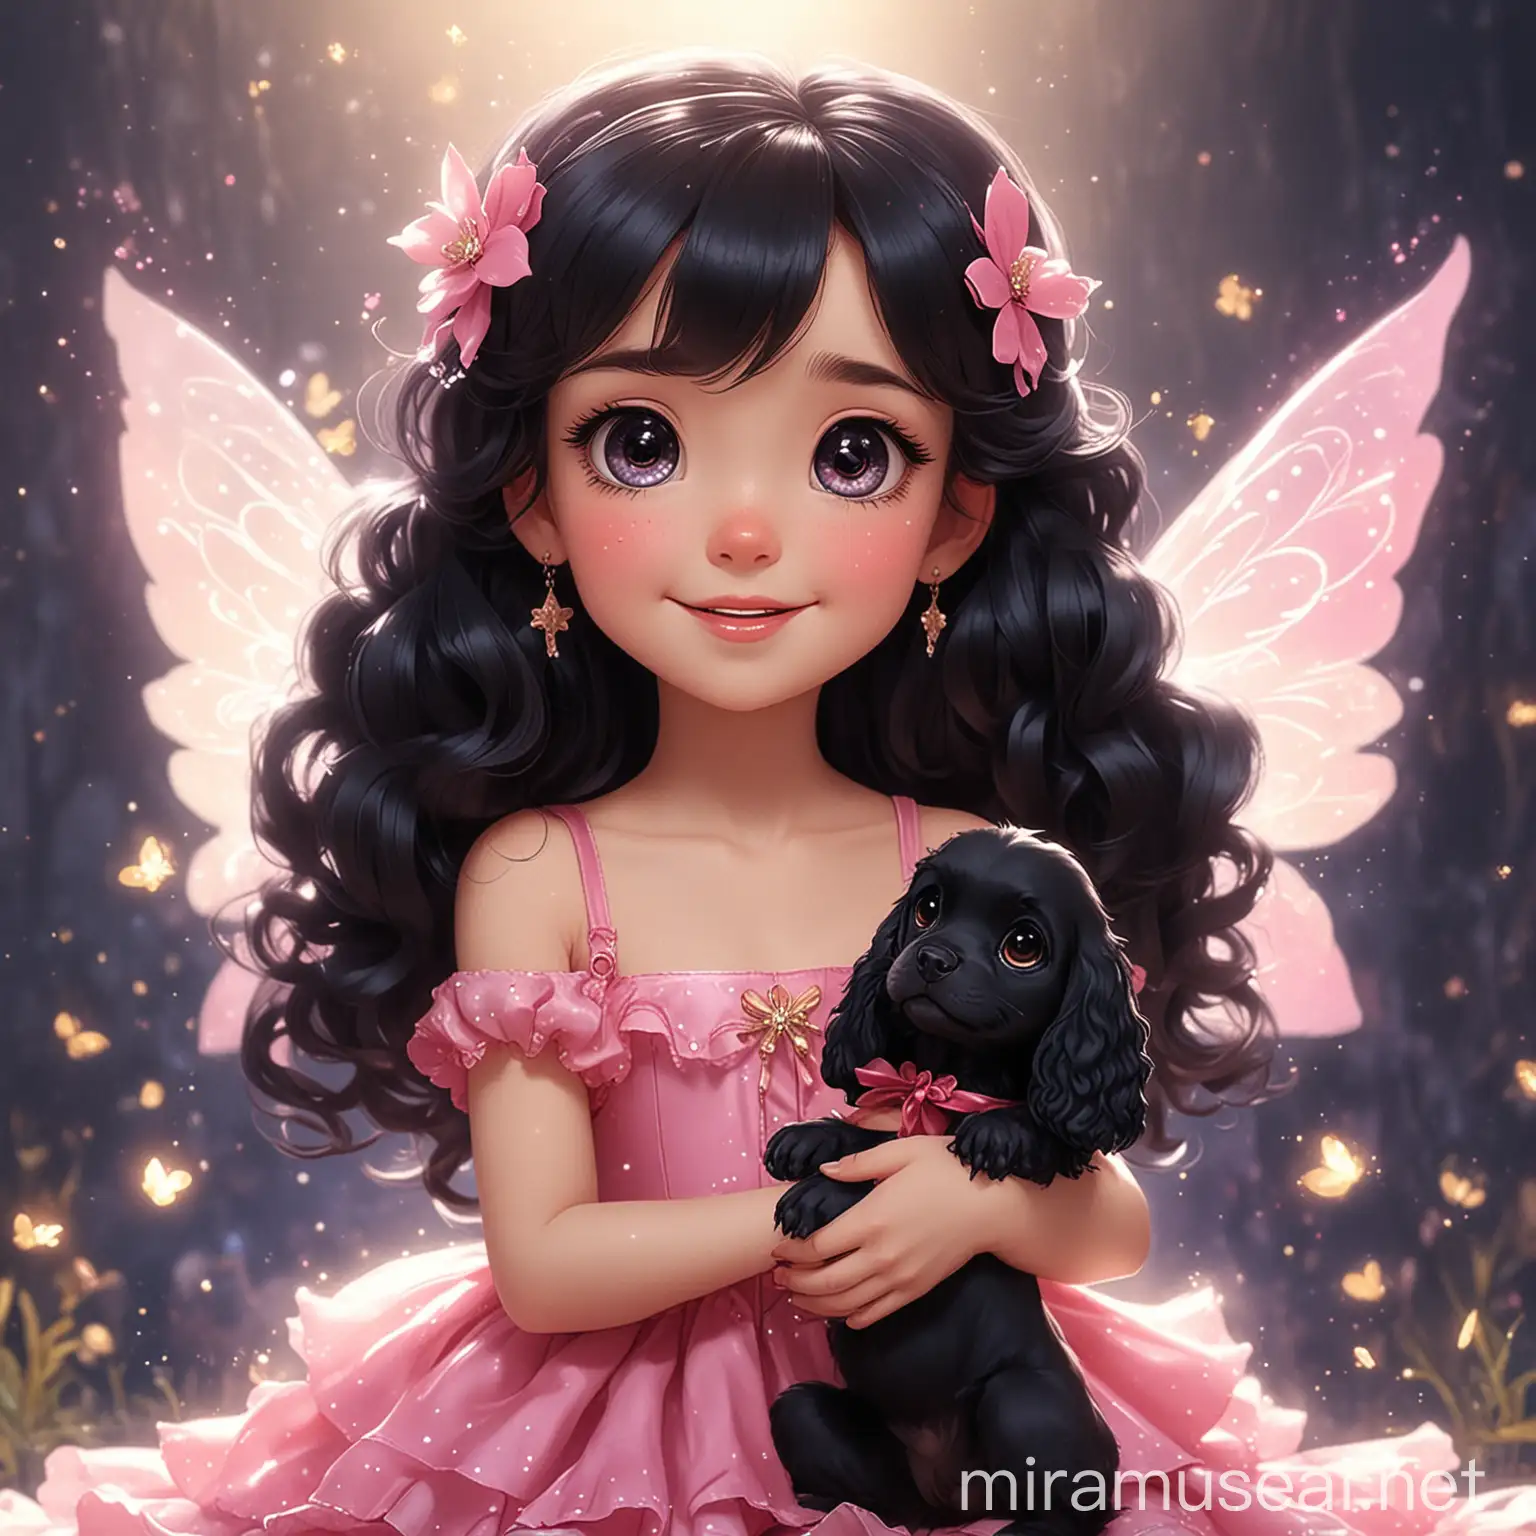 Disney Joy Little Girl Playing Fairy Tale with Black Cocker Spaniel in Anime Form